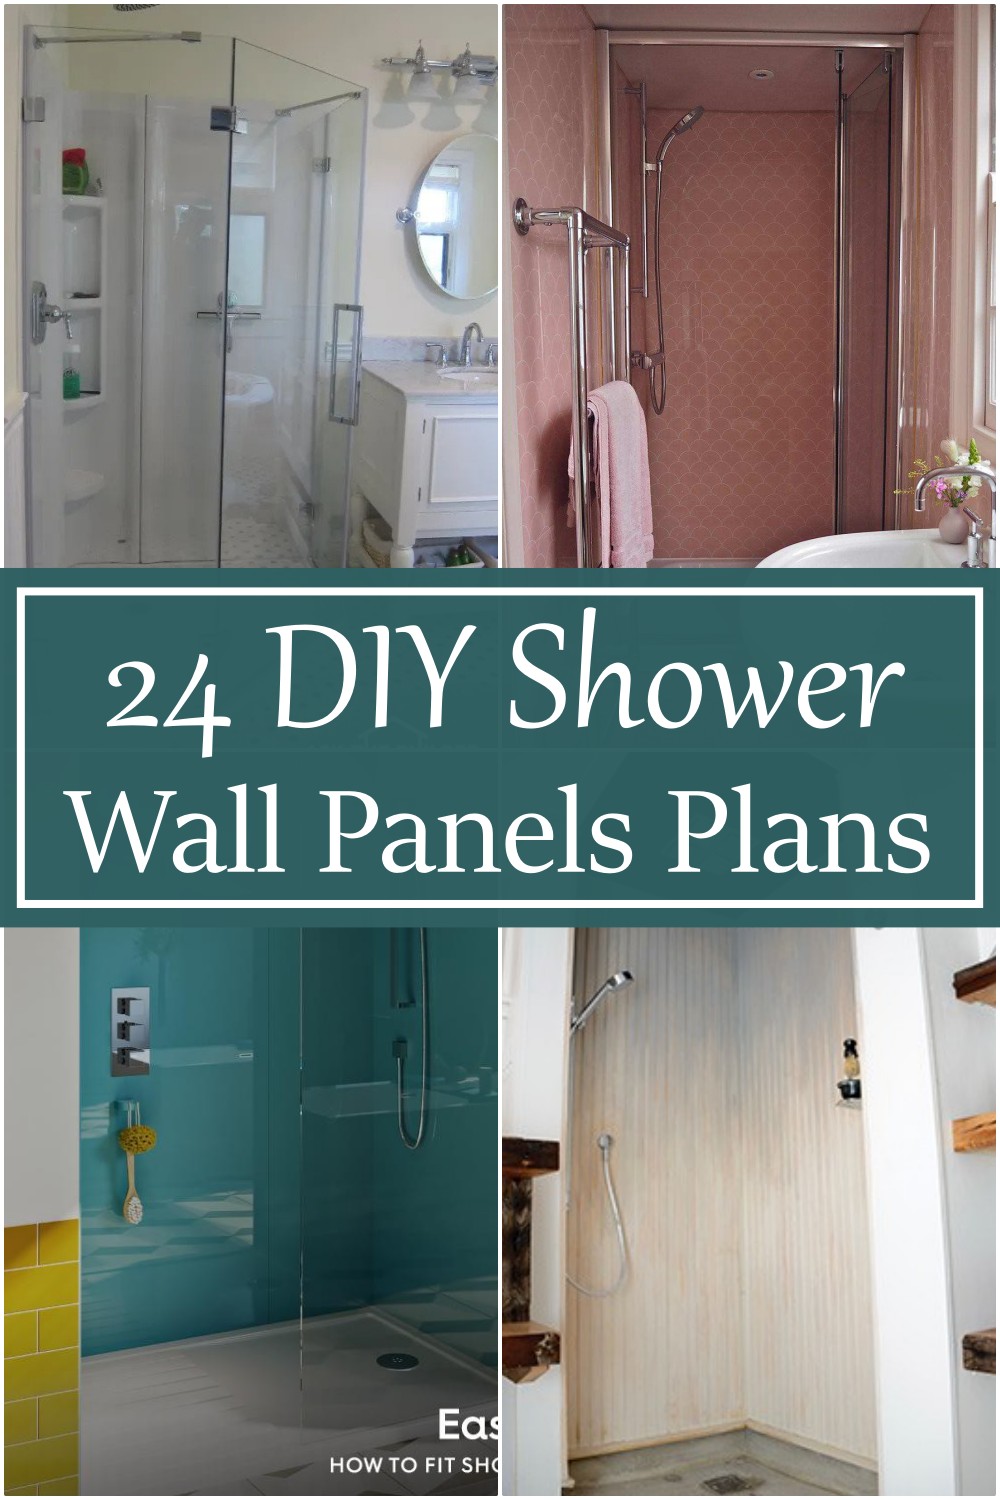 DIY Shower Wall Panels Plans